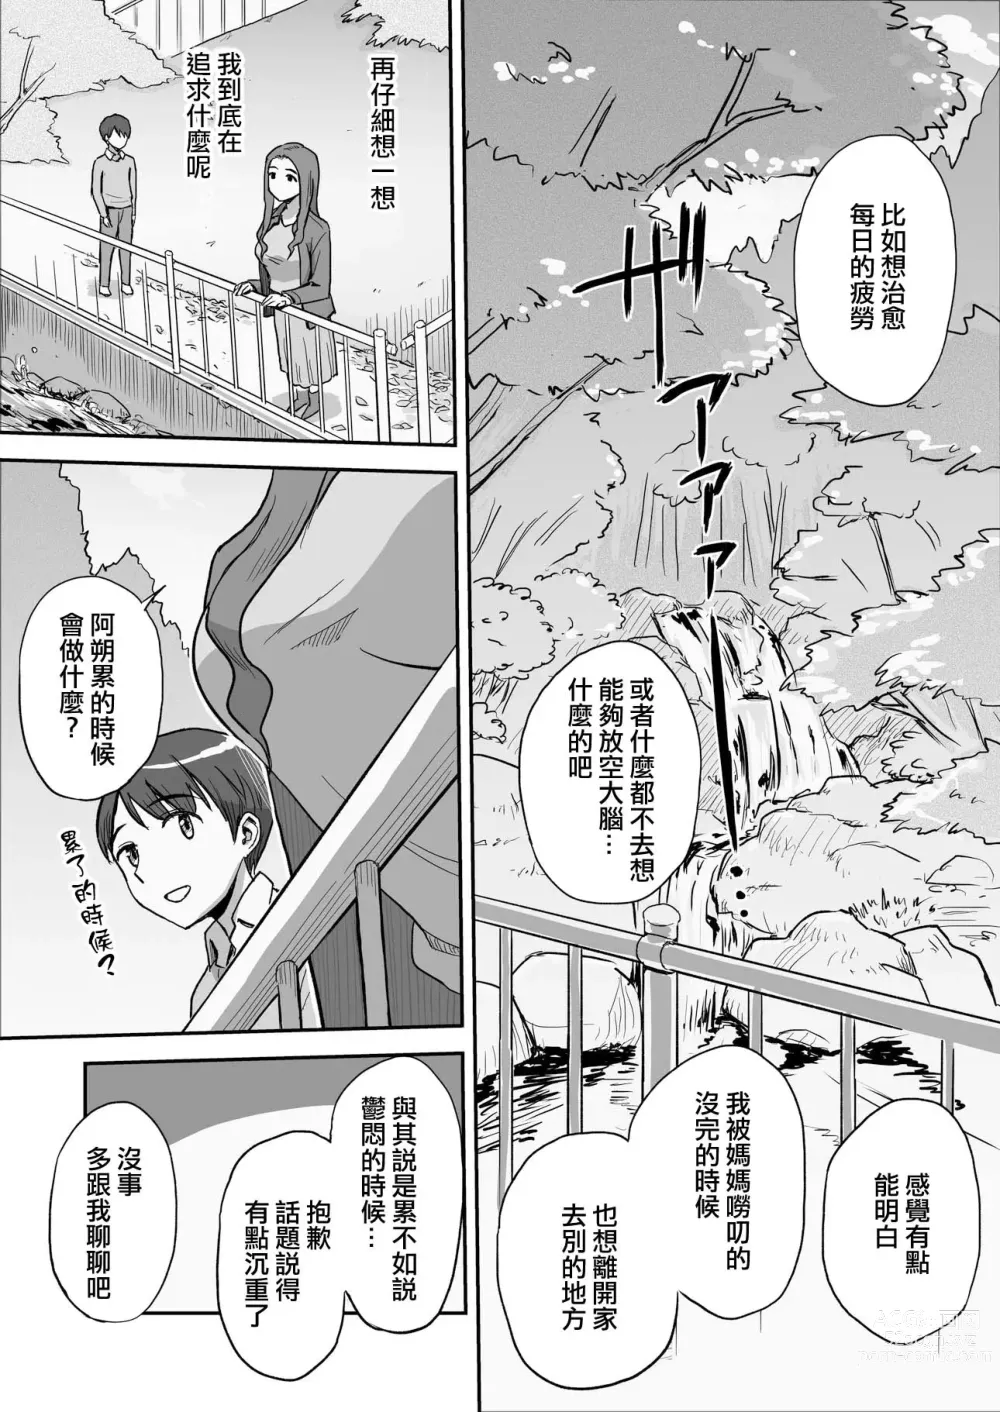 Page 8 of doujinshi 僅此一天的媽媽 這是隻屬於我們...兩人的秘密...哦?....